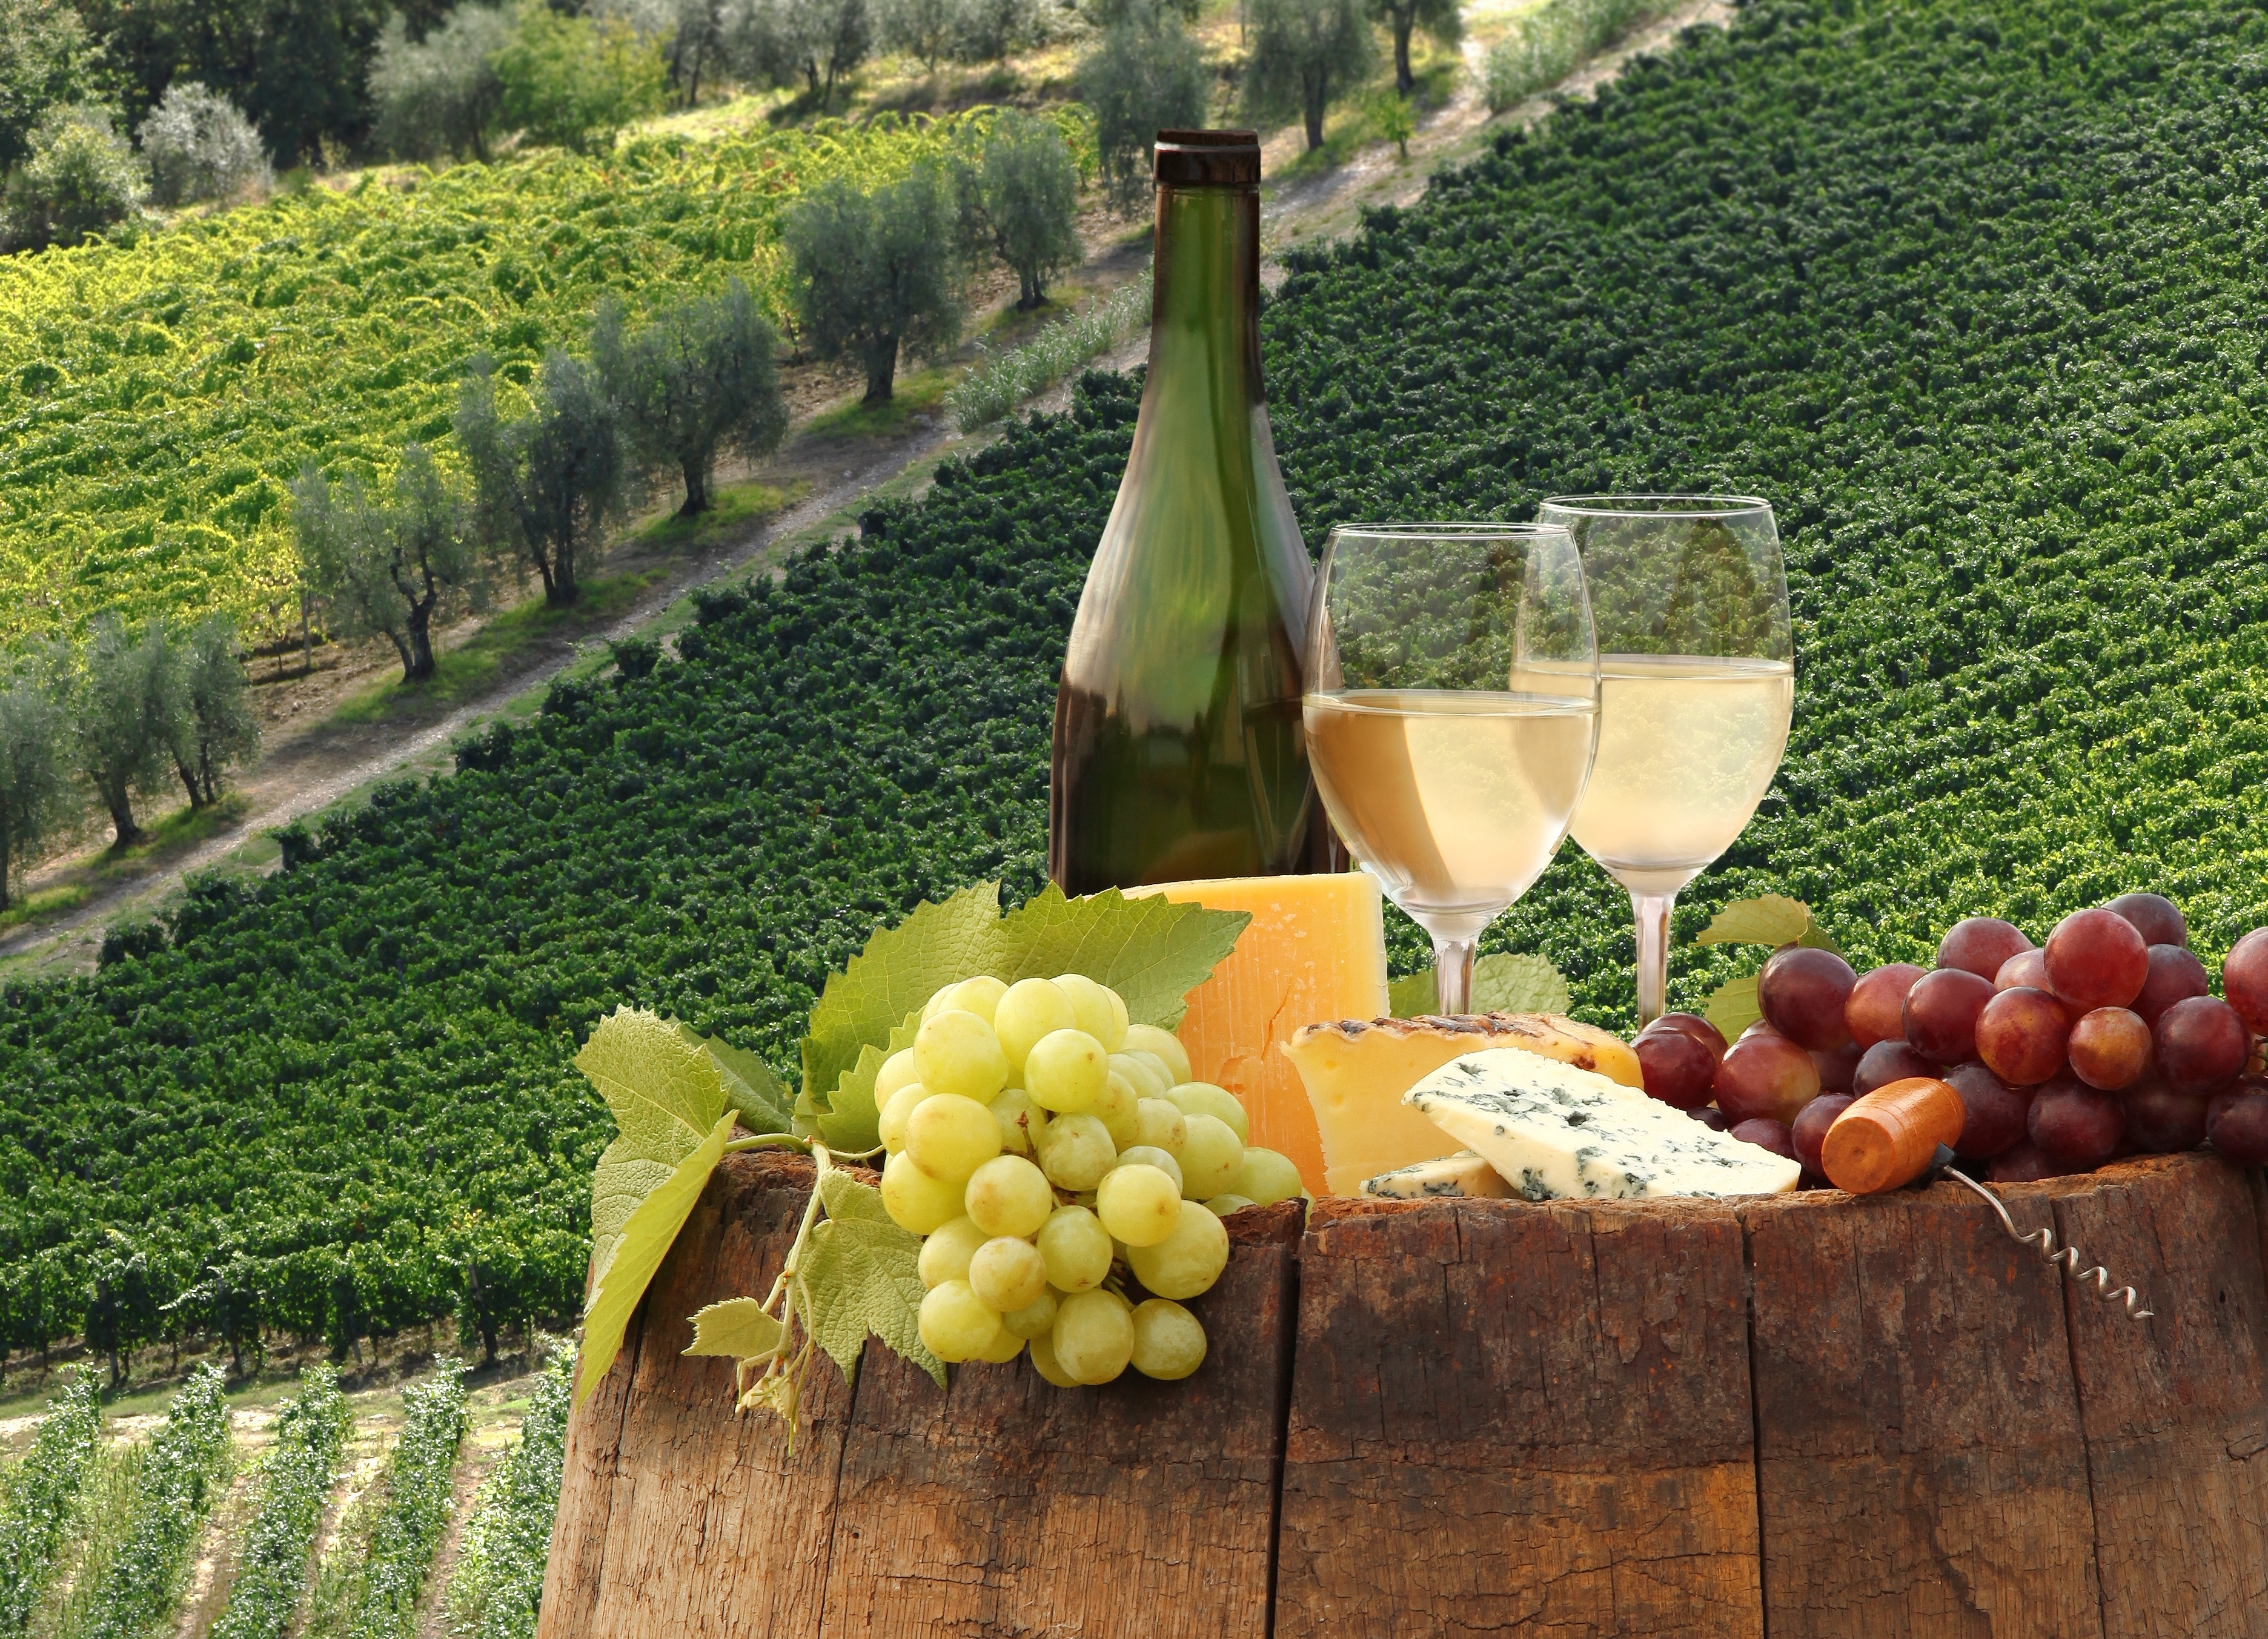 Виноградно лимонного вина. Тоскана Италия винодельни. Виноградники и вино Италии. Виноградники Абрау Дюрсо.